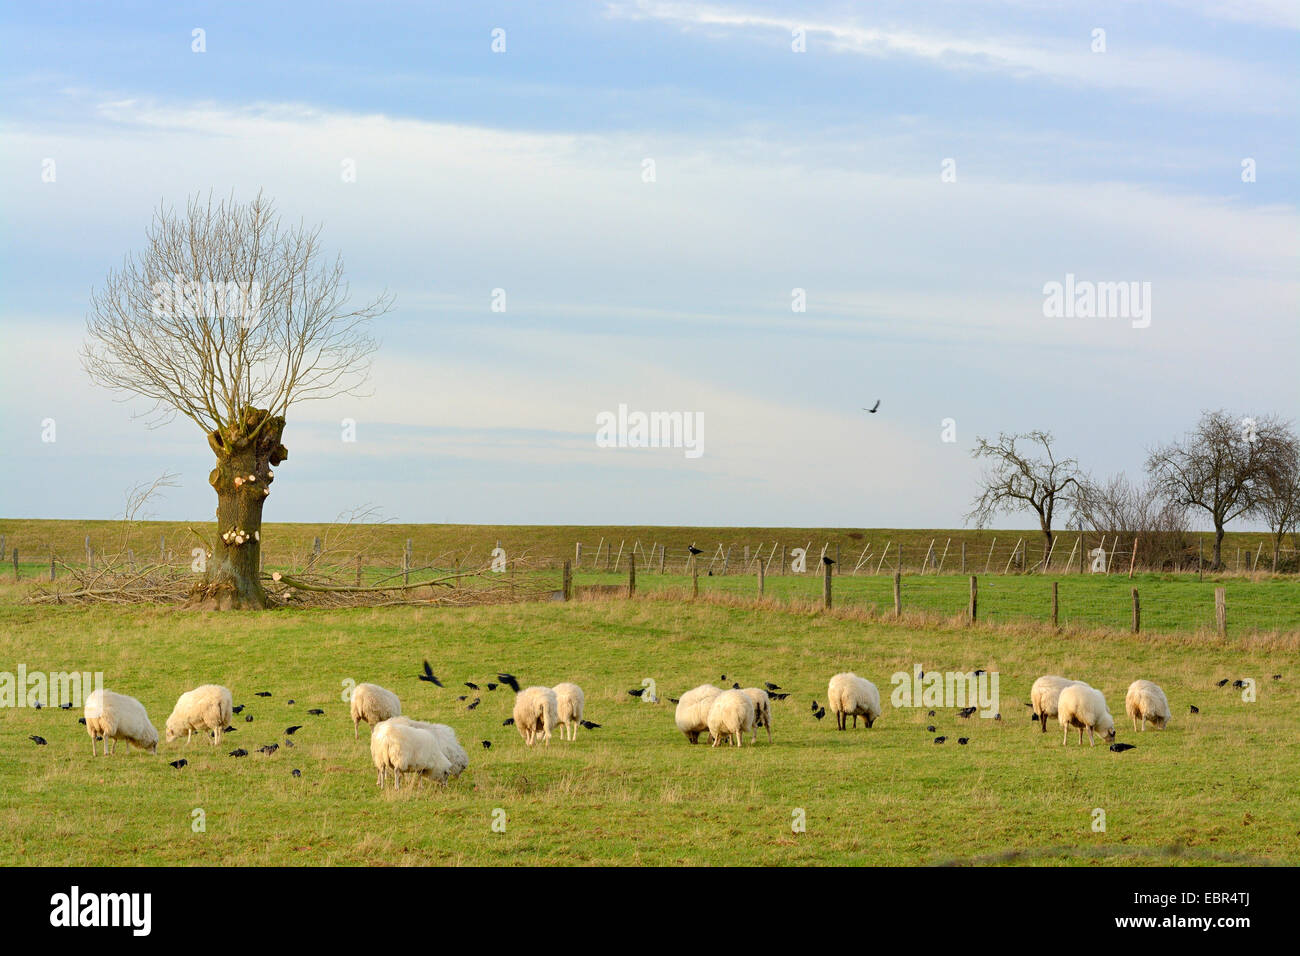 domestic sheep (Ovis ammon f. aries), Lower Rhine region with pollarded willow and sheep, Germany, North Rhine-Westphalia Stock Photo